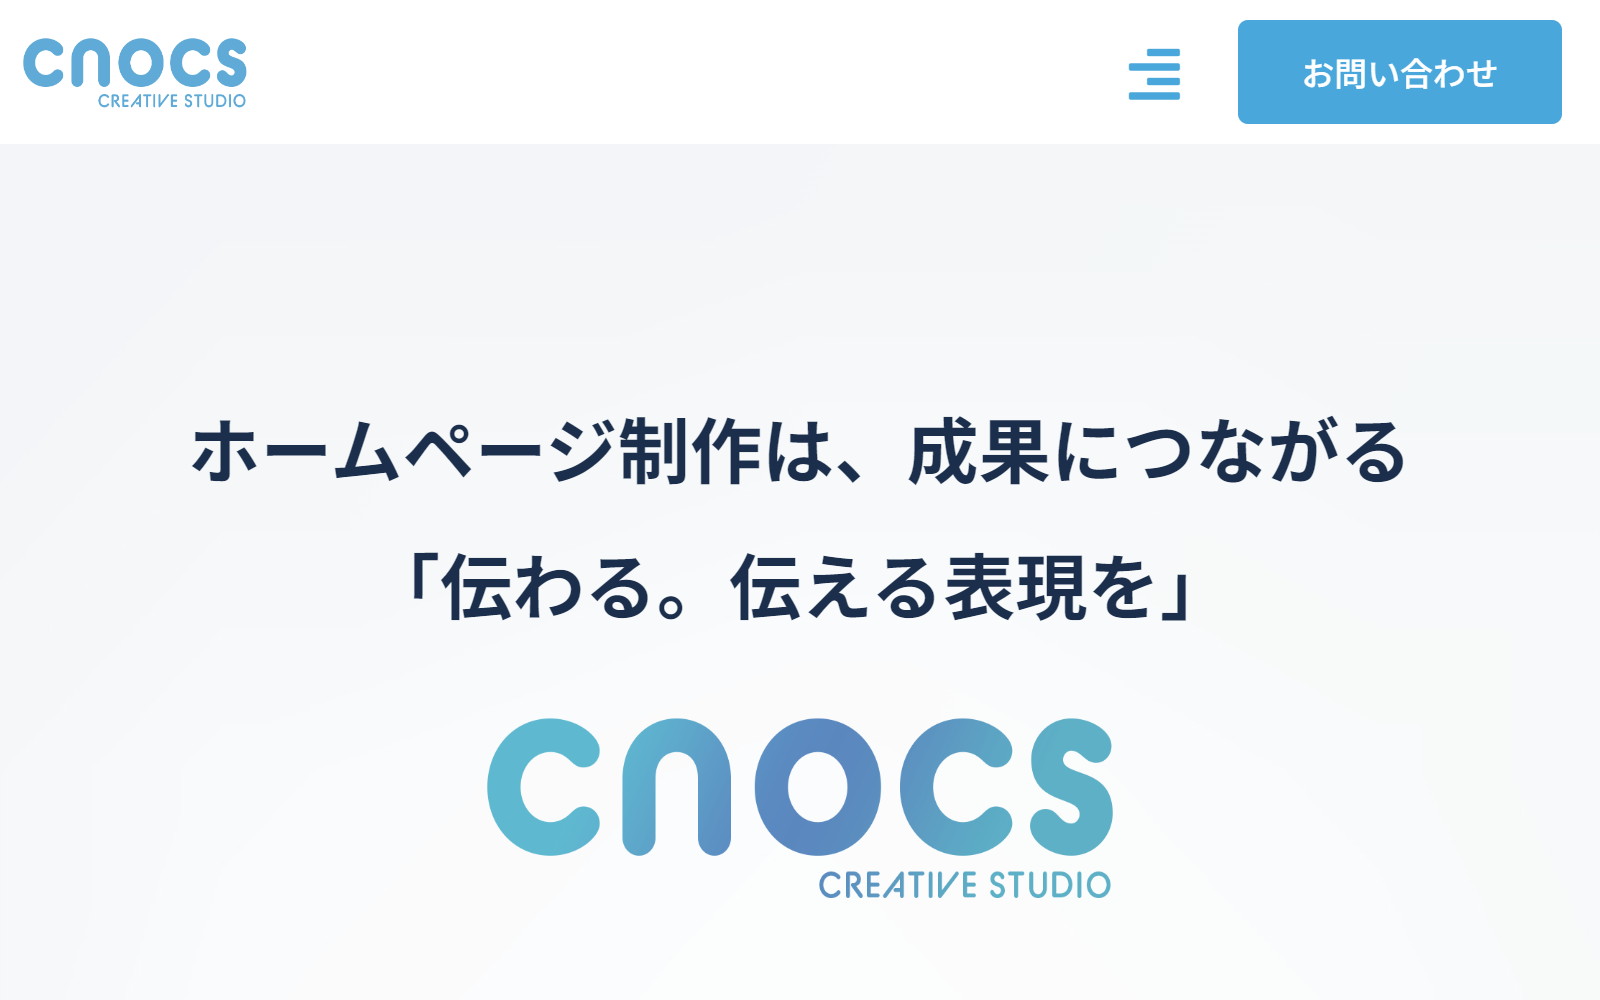 cnocs（クノックス） CREATIVE STUDIO